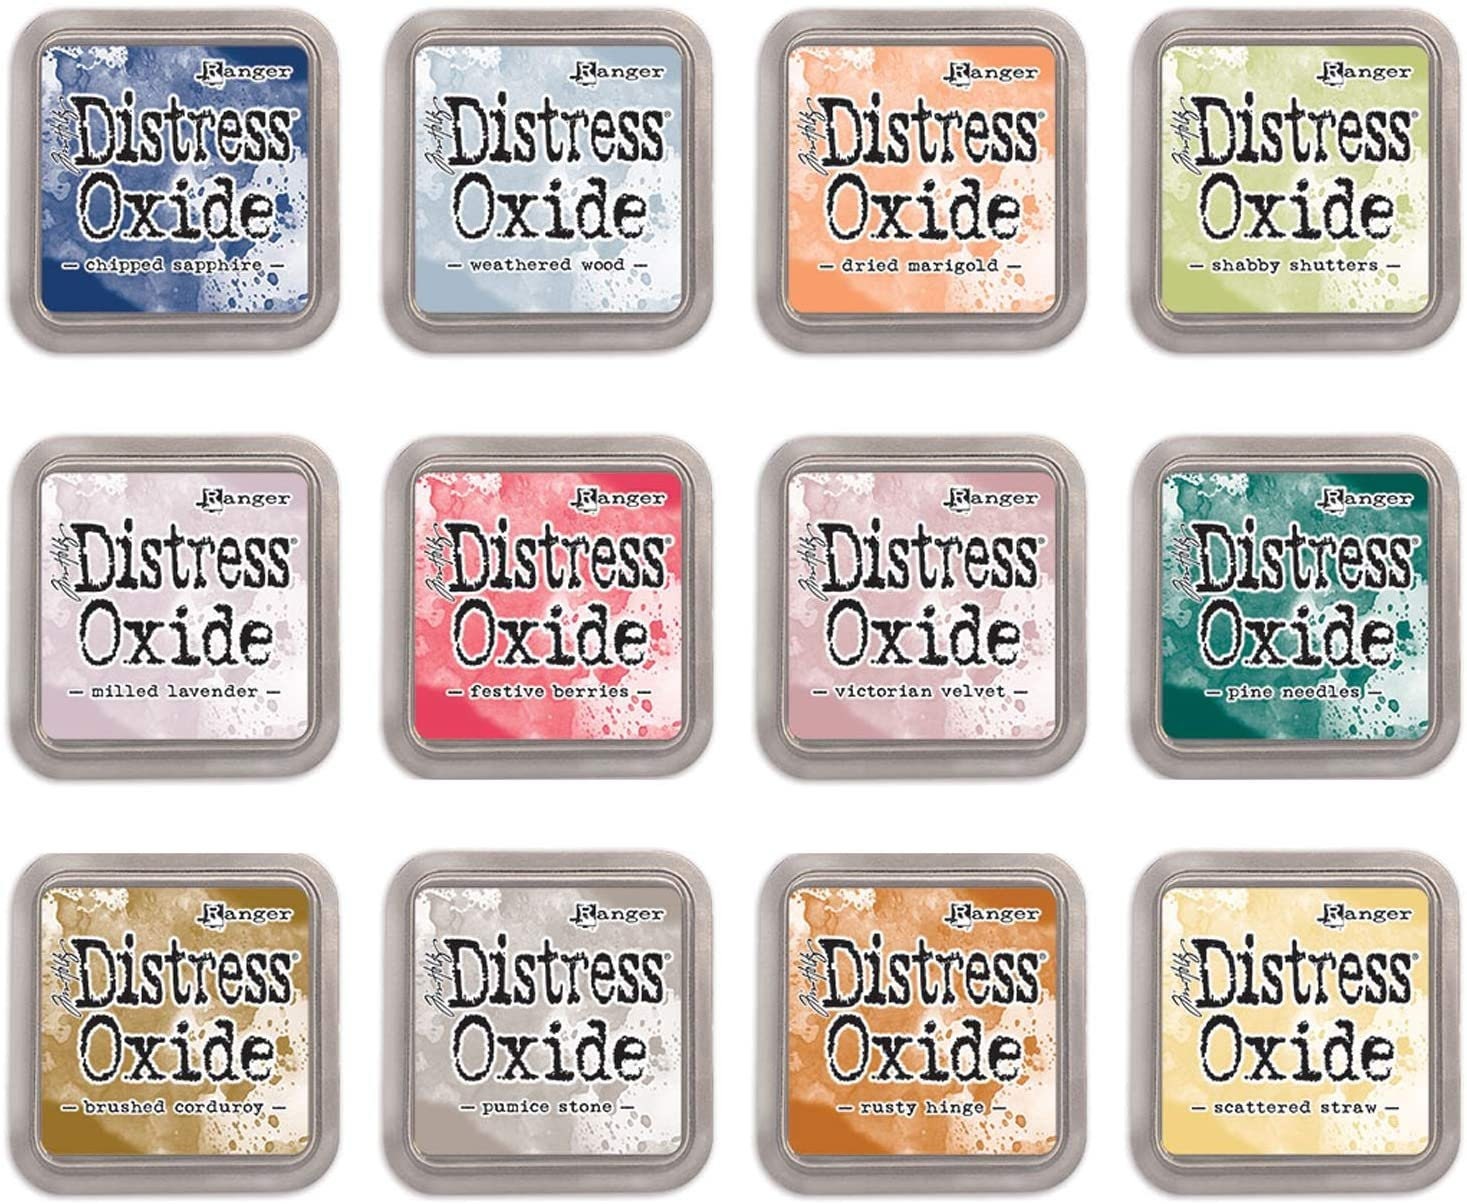 distress oxide - pine needles